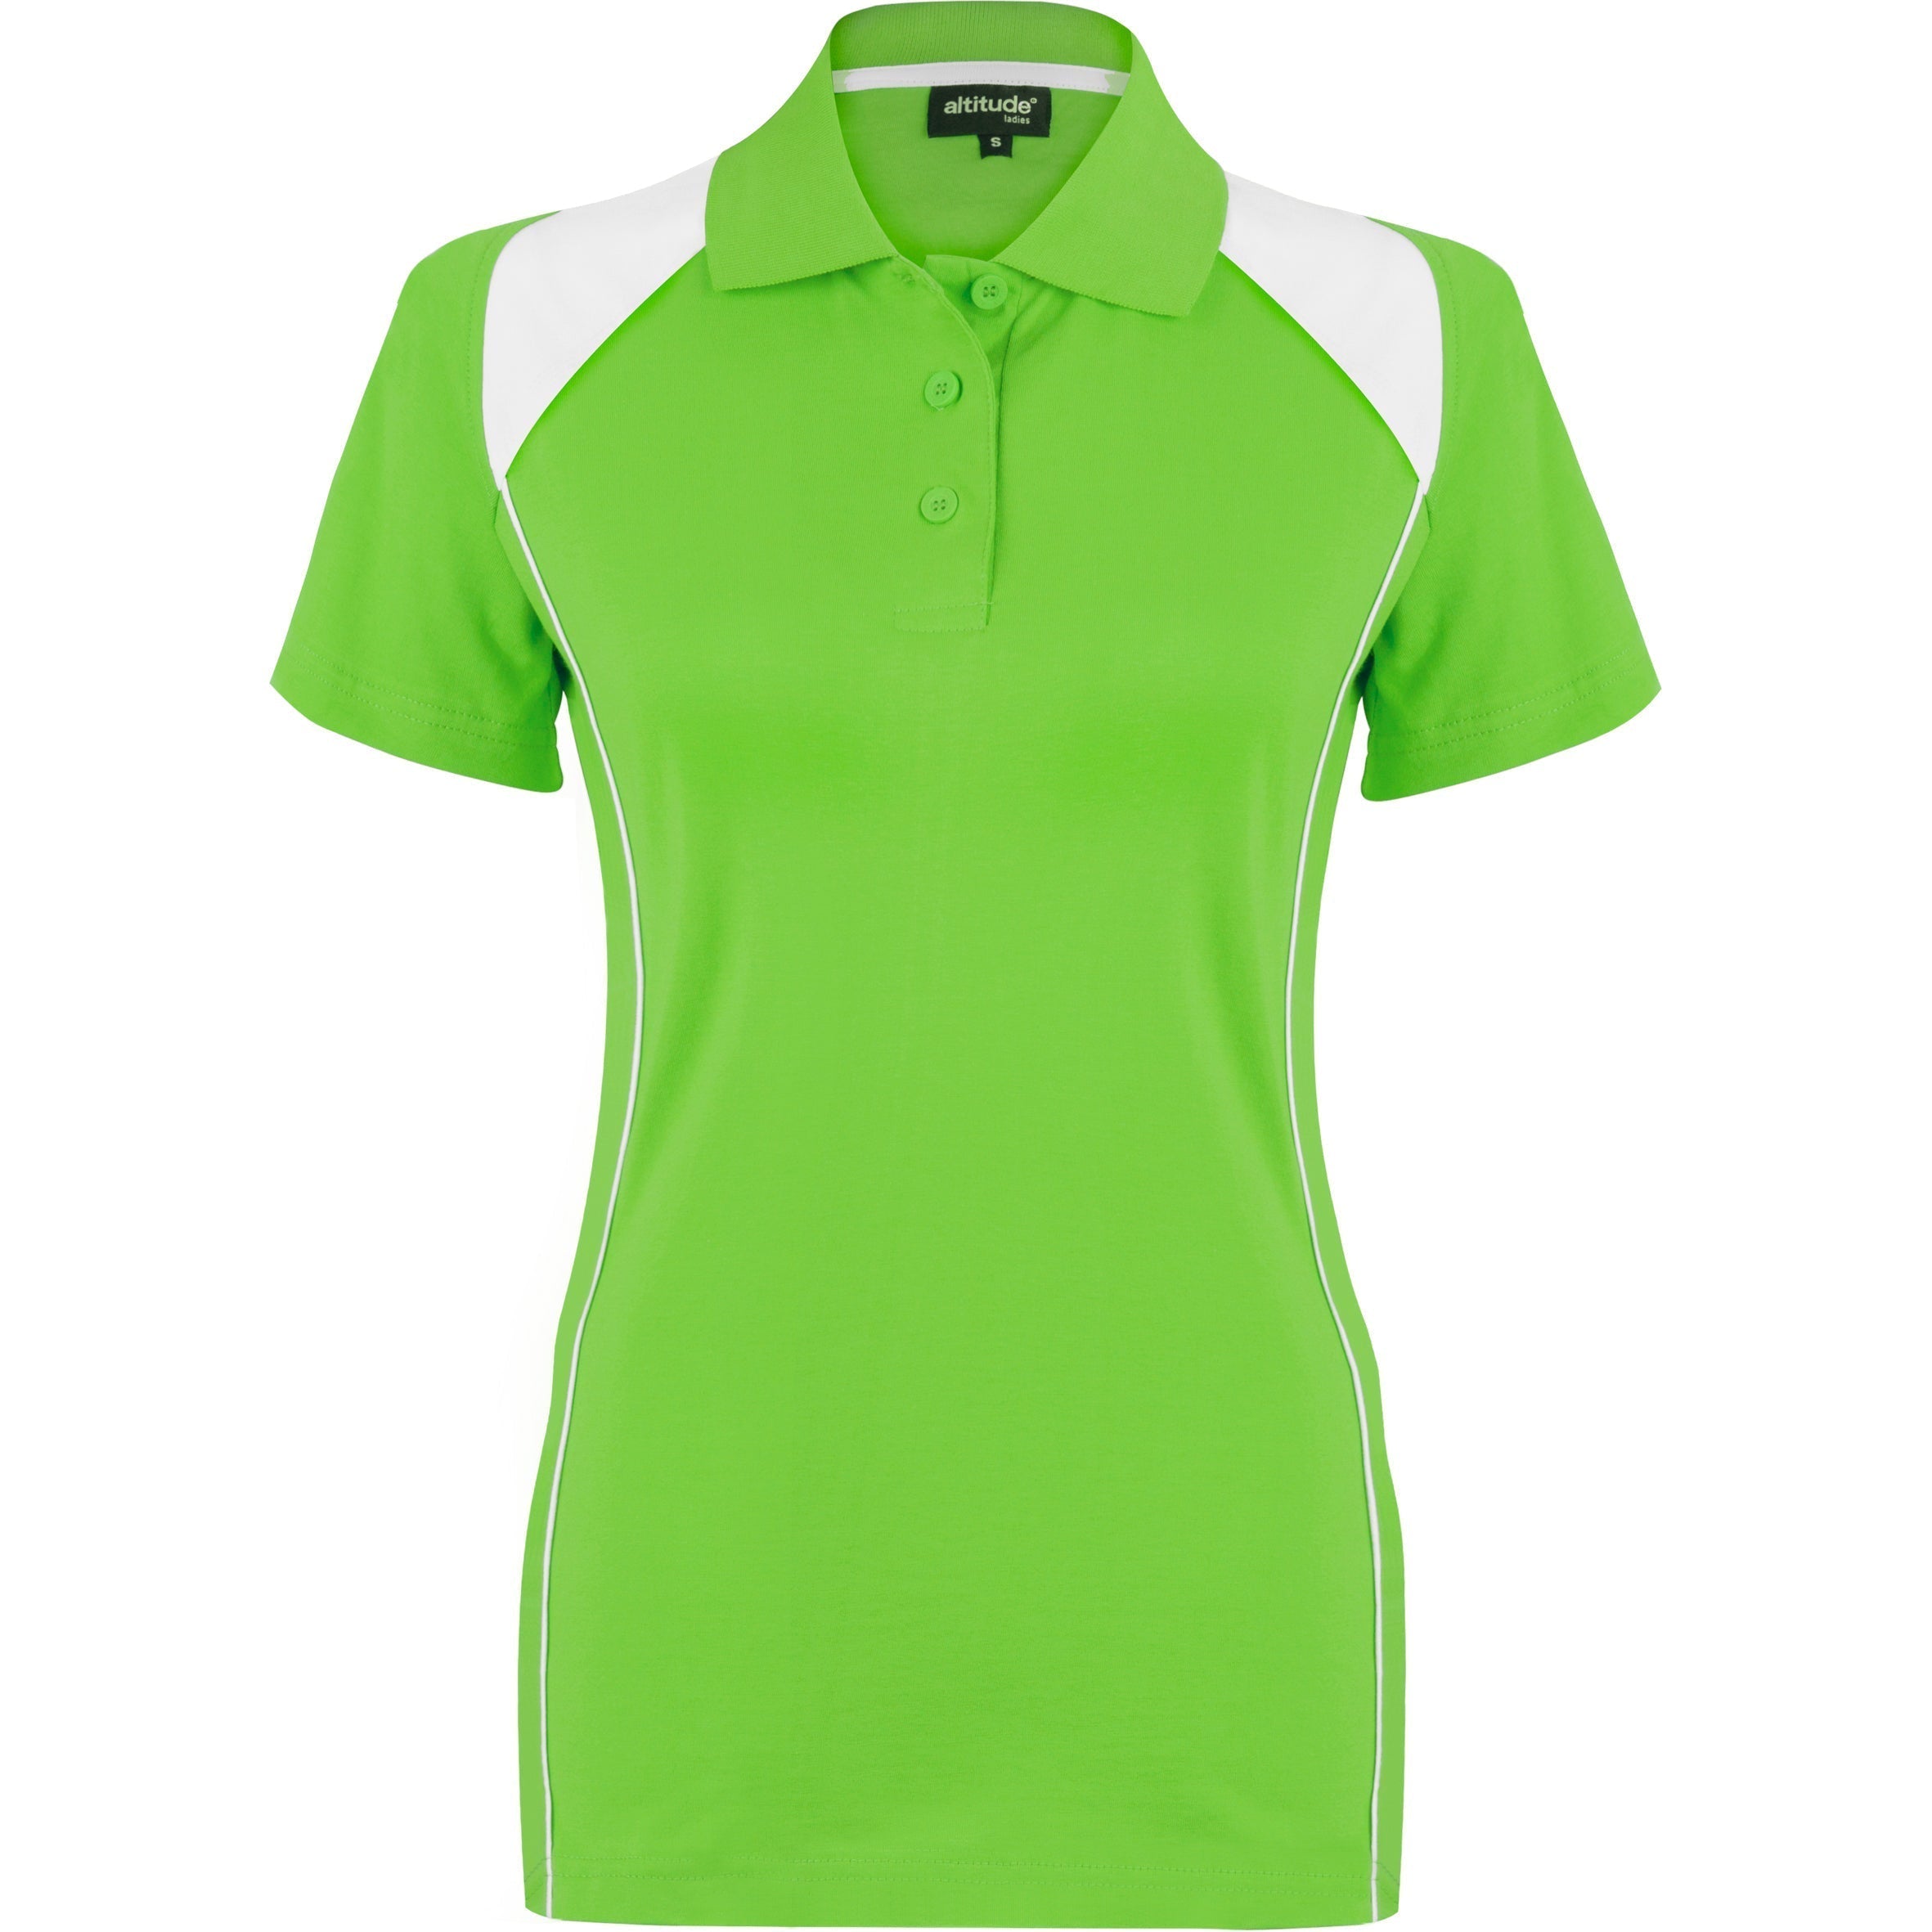 Ladies Infinity Golf Shirt-